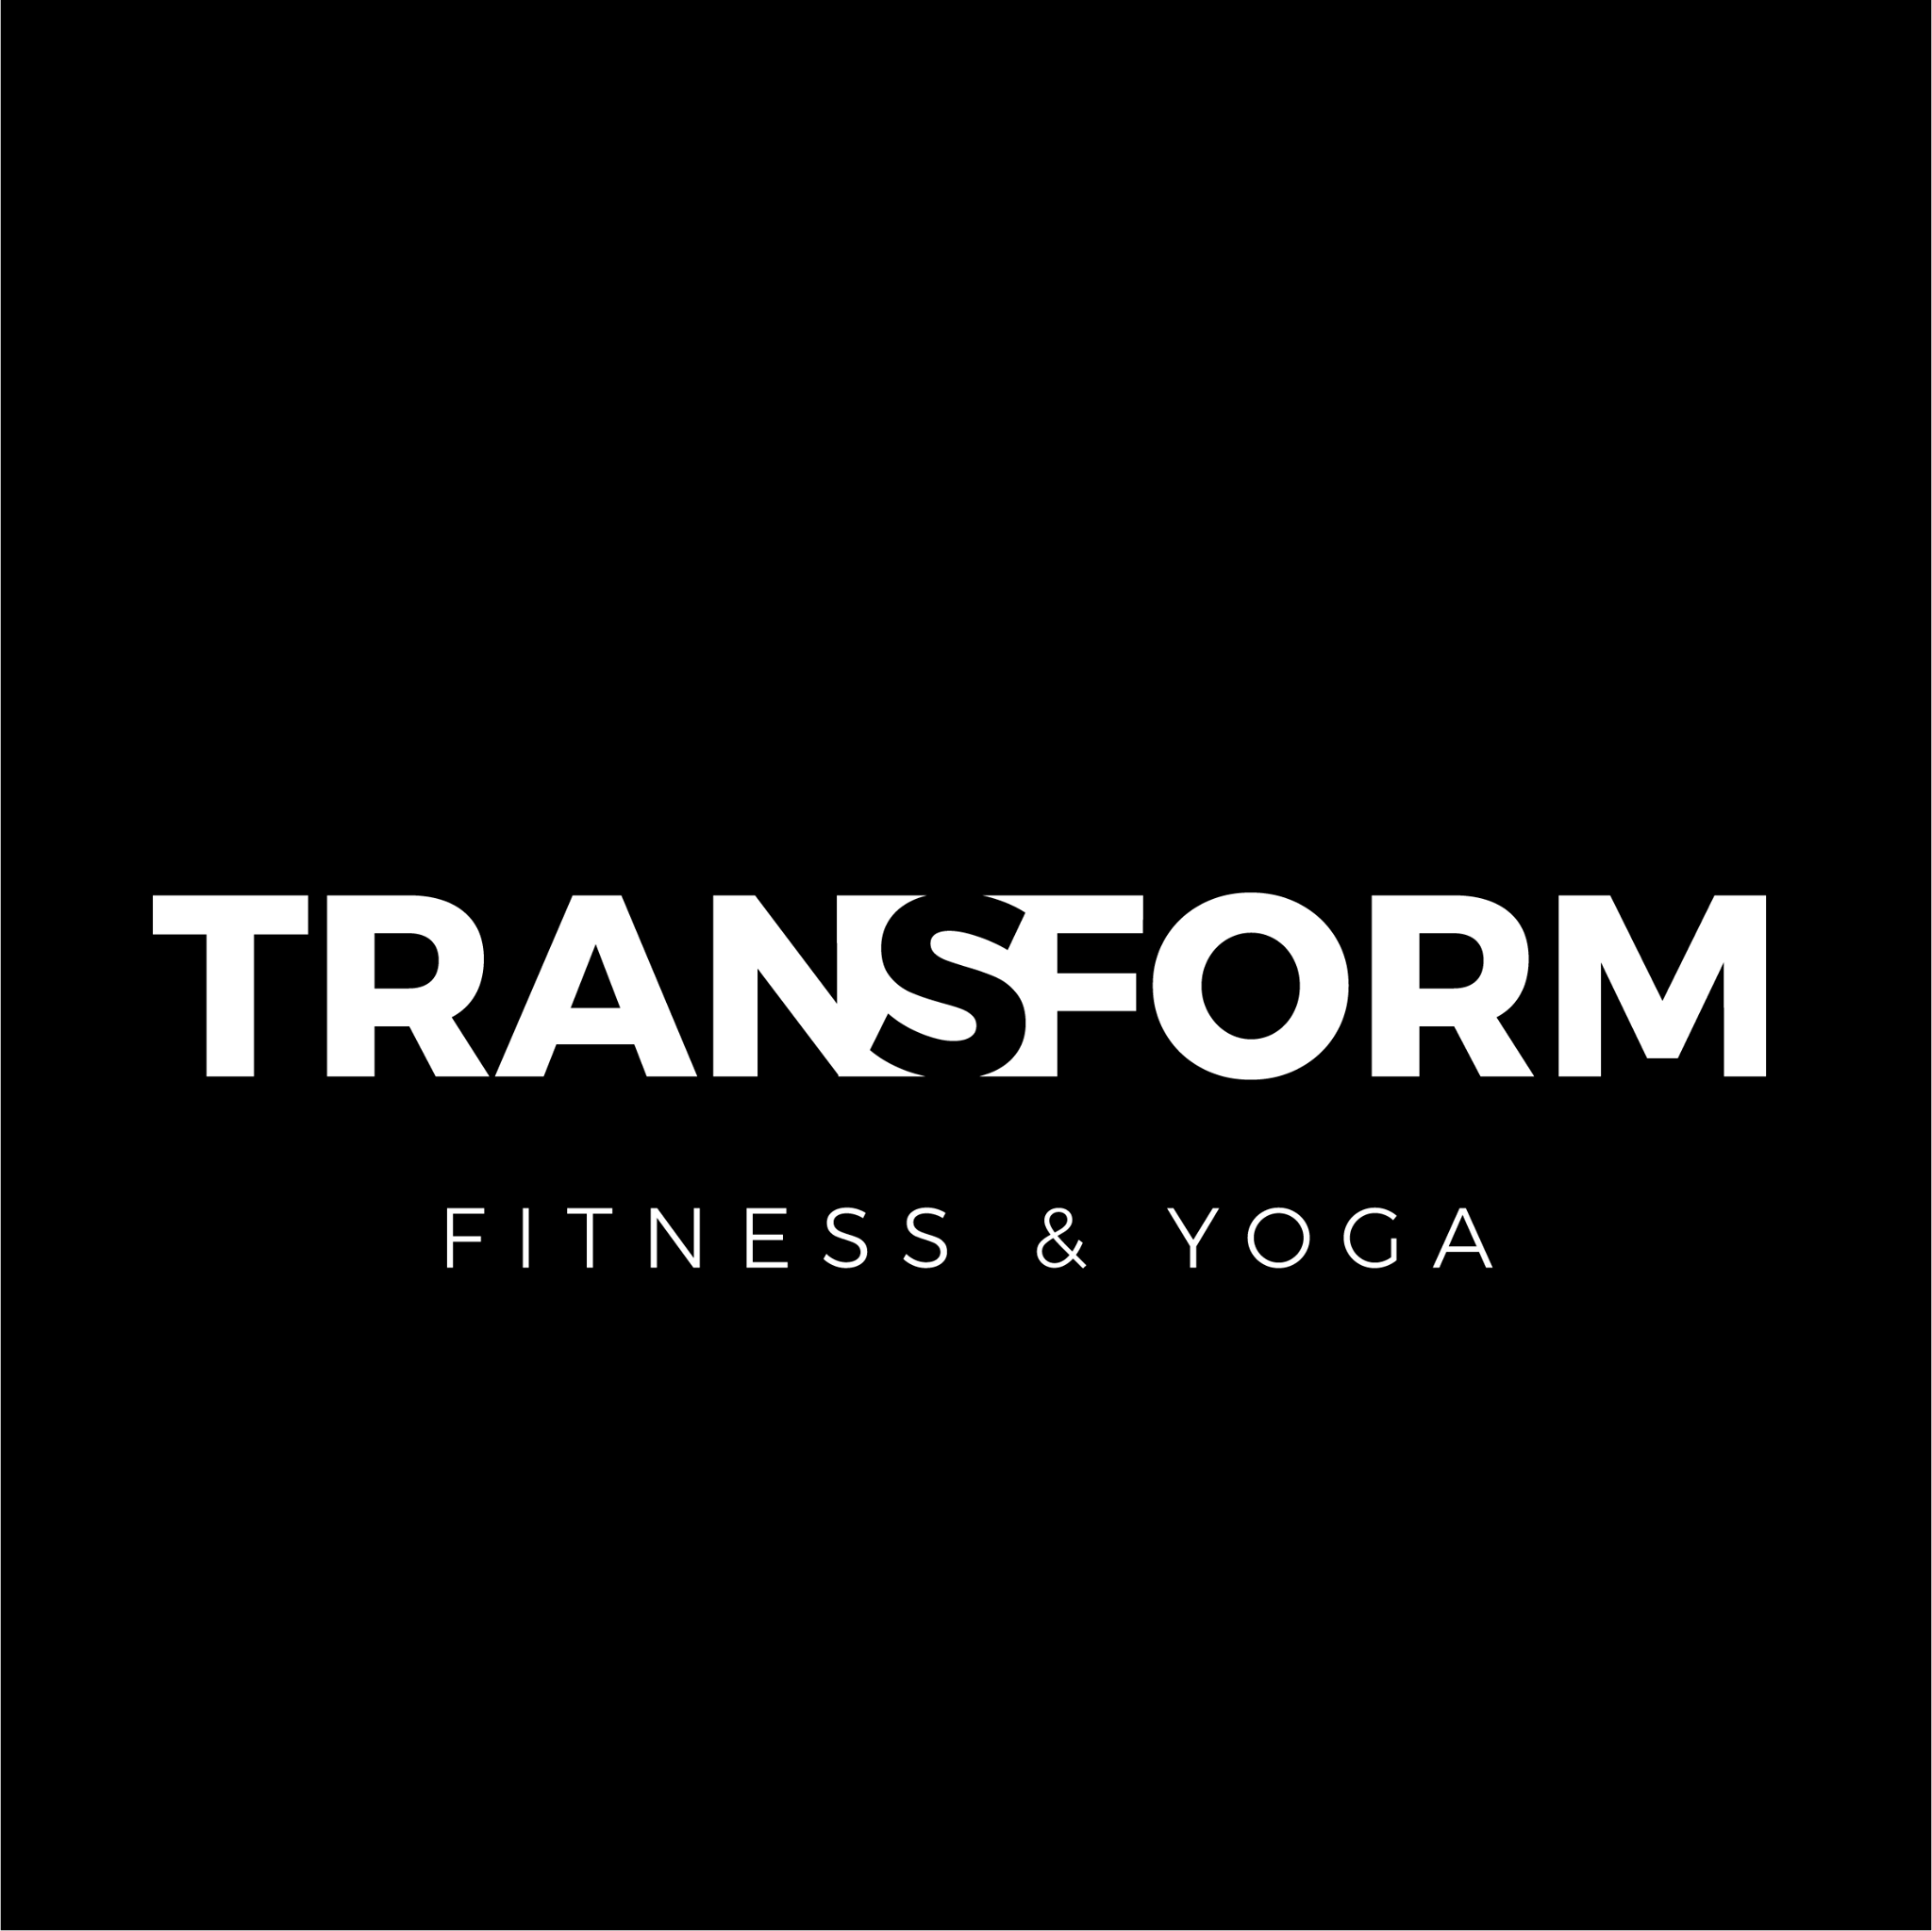 Transform Fitness & Yoga